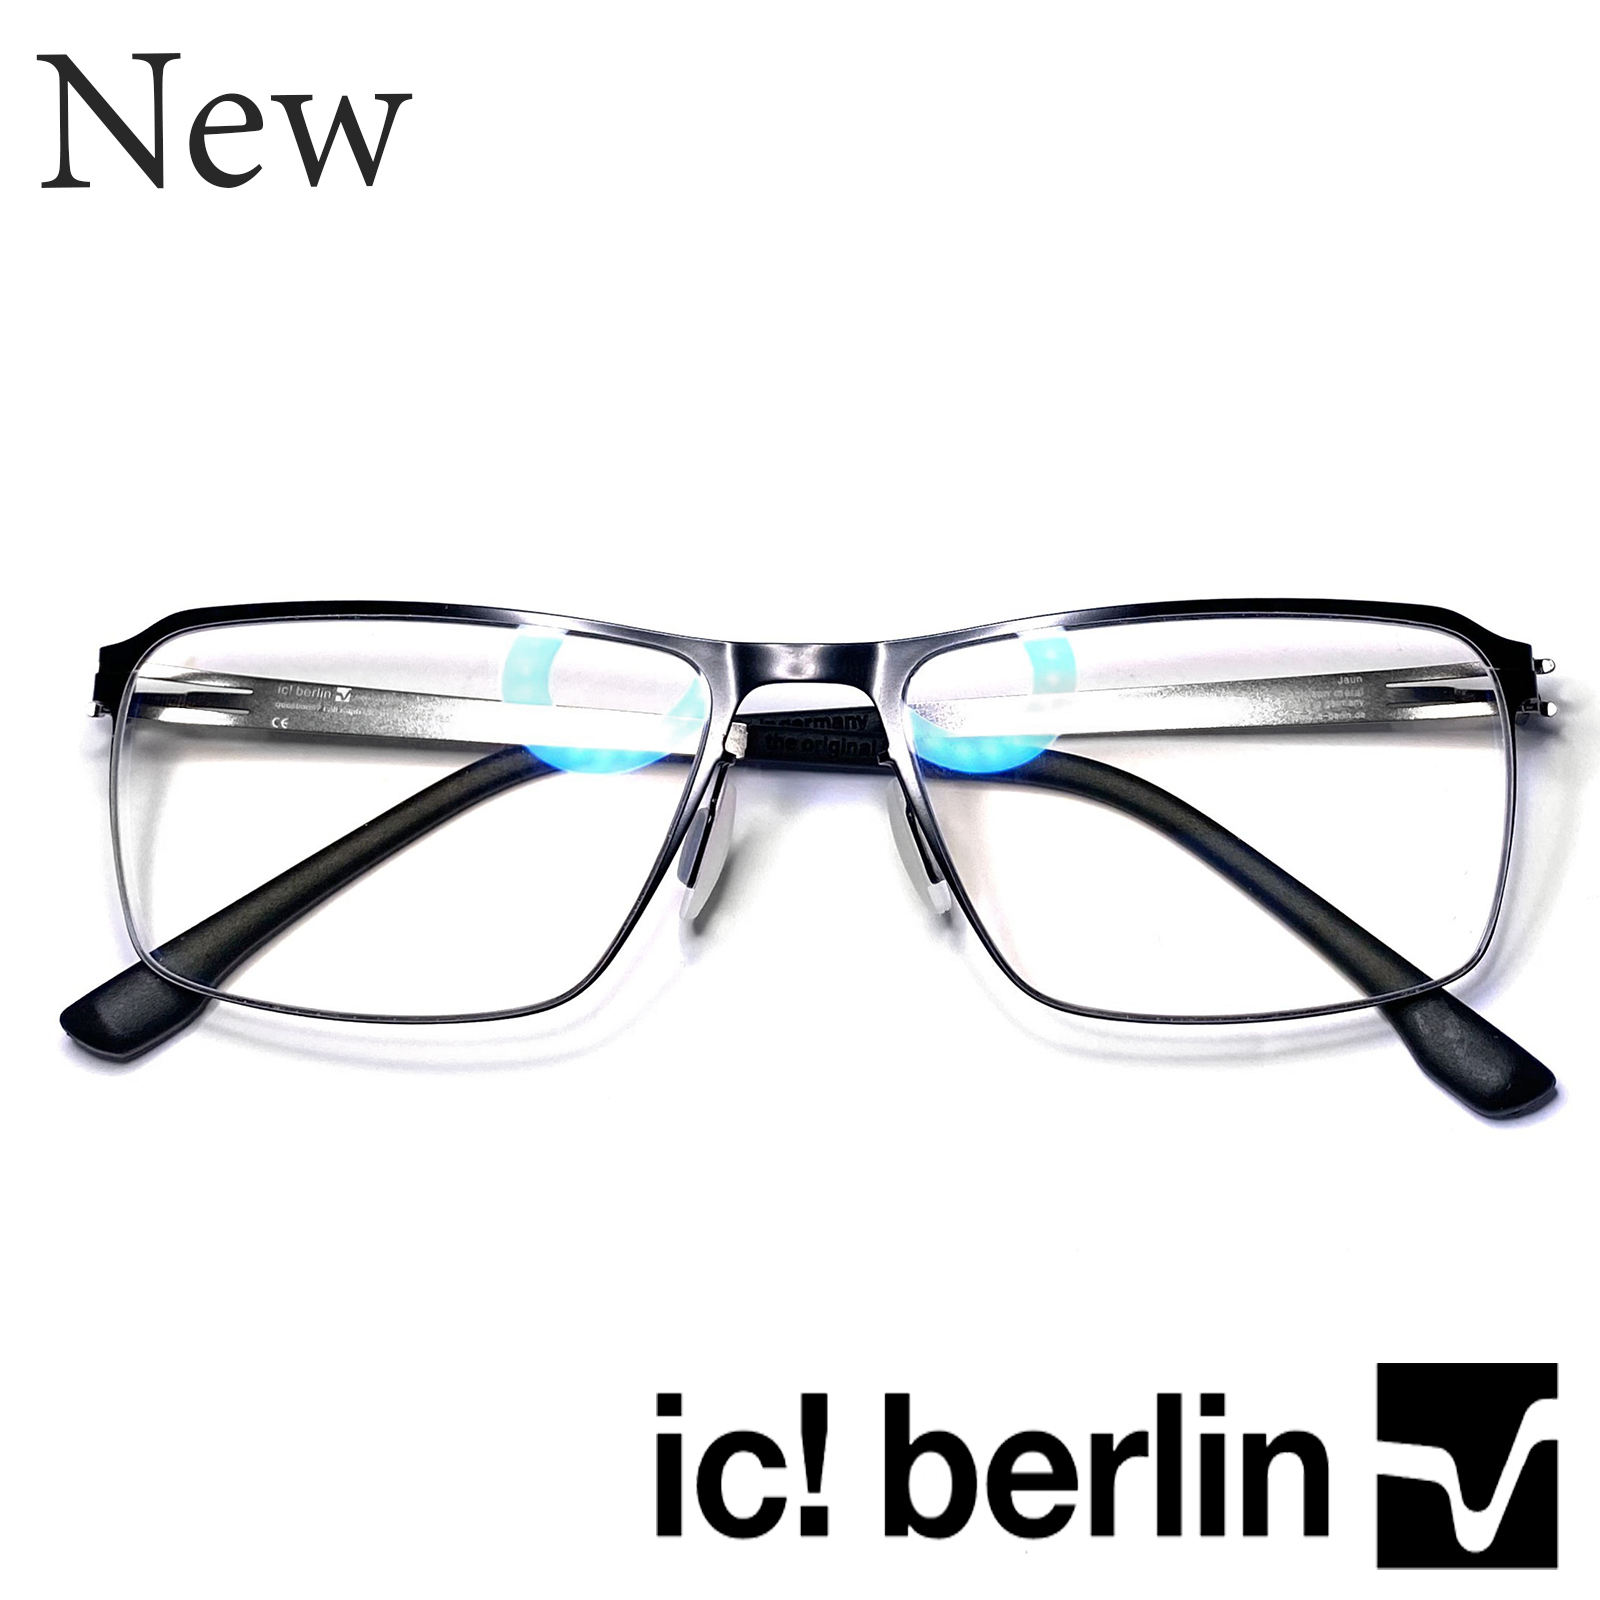 IC กรอบแว่นตา สำหรับตัดเลนส์ แว่นตาชาย หญิง Fashion รุ่น Jaun 77 สีดำขาเงิน กรอบเต็ม ทรงเหลี่ยม ขาไม่ใช้น็อต ถอดได้ วัสดุ Stainless Steel